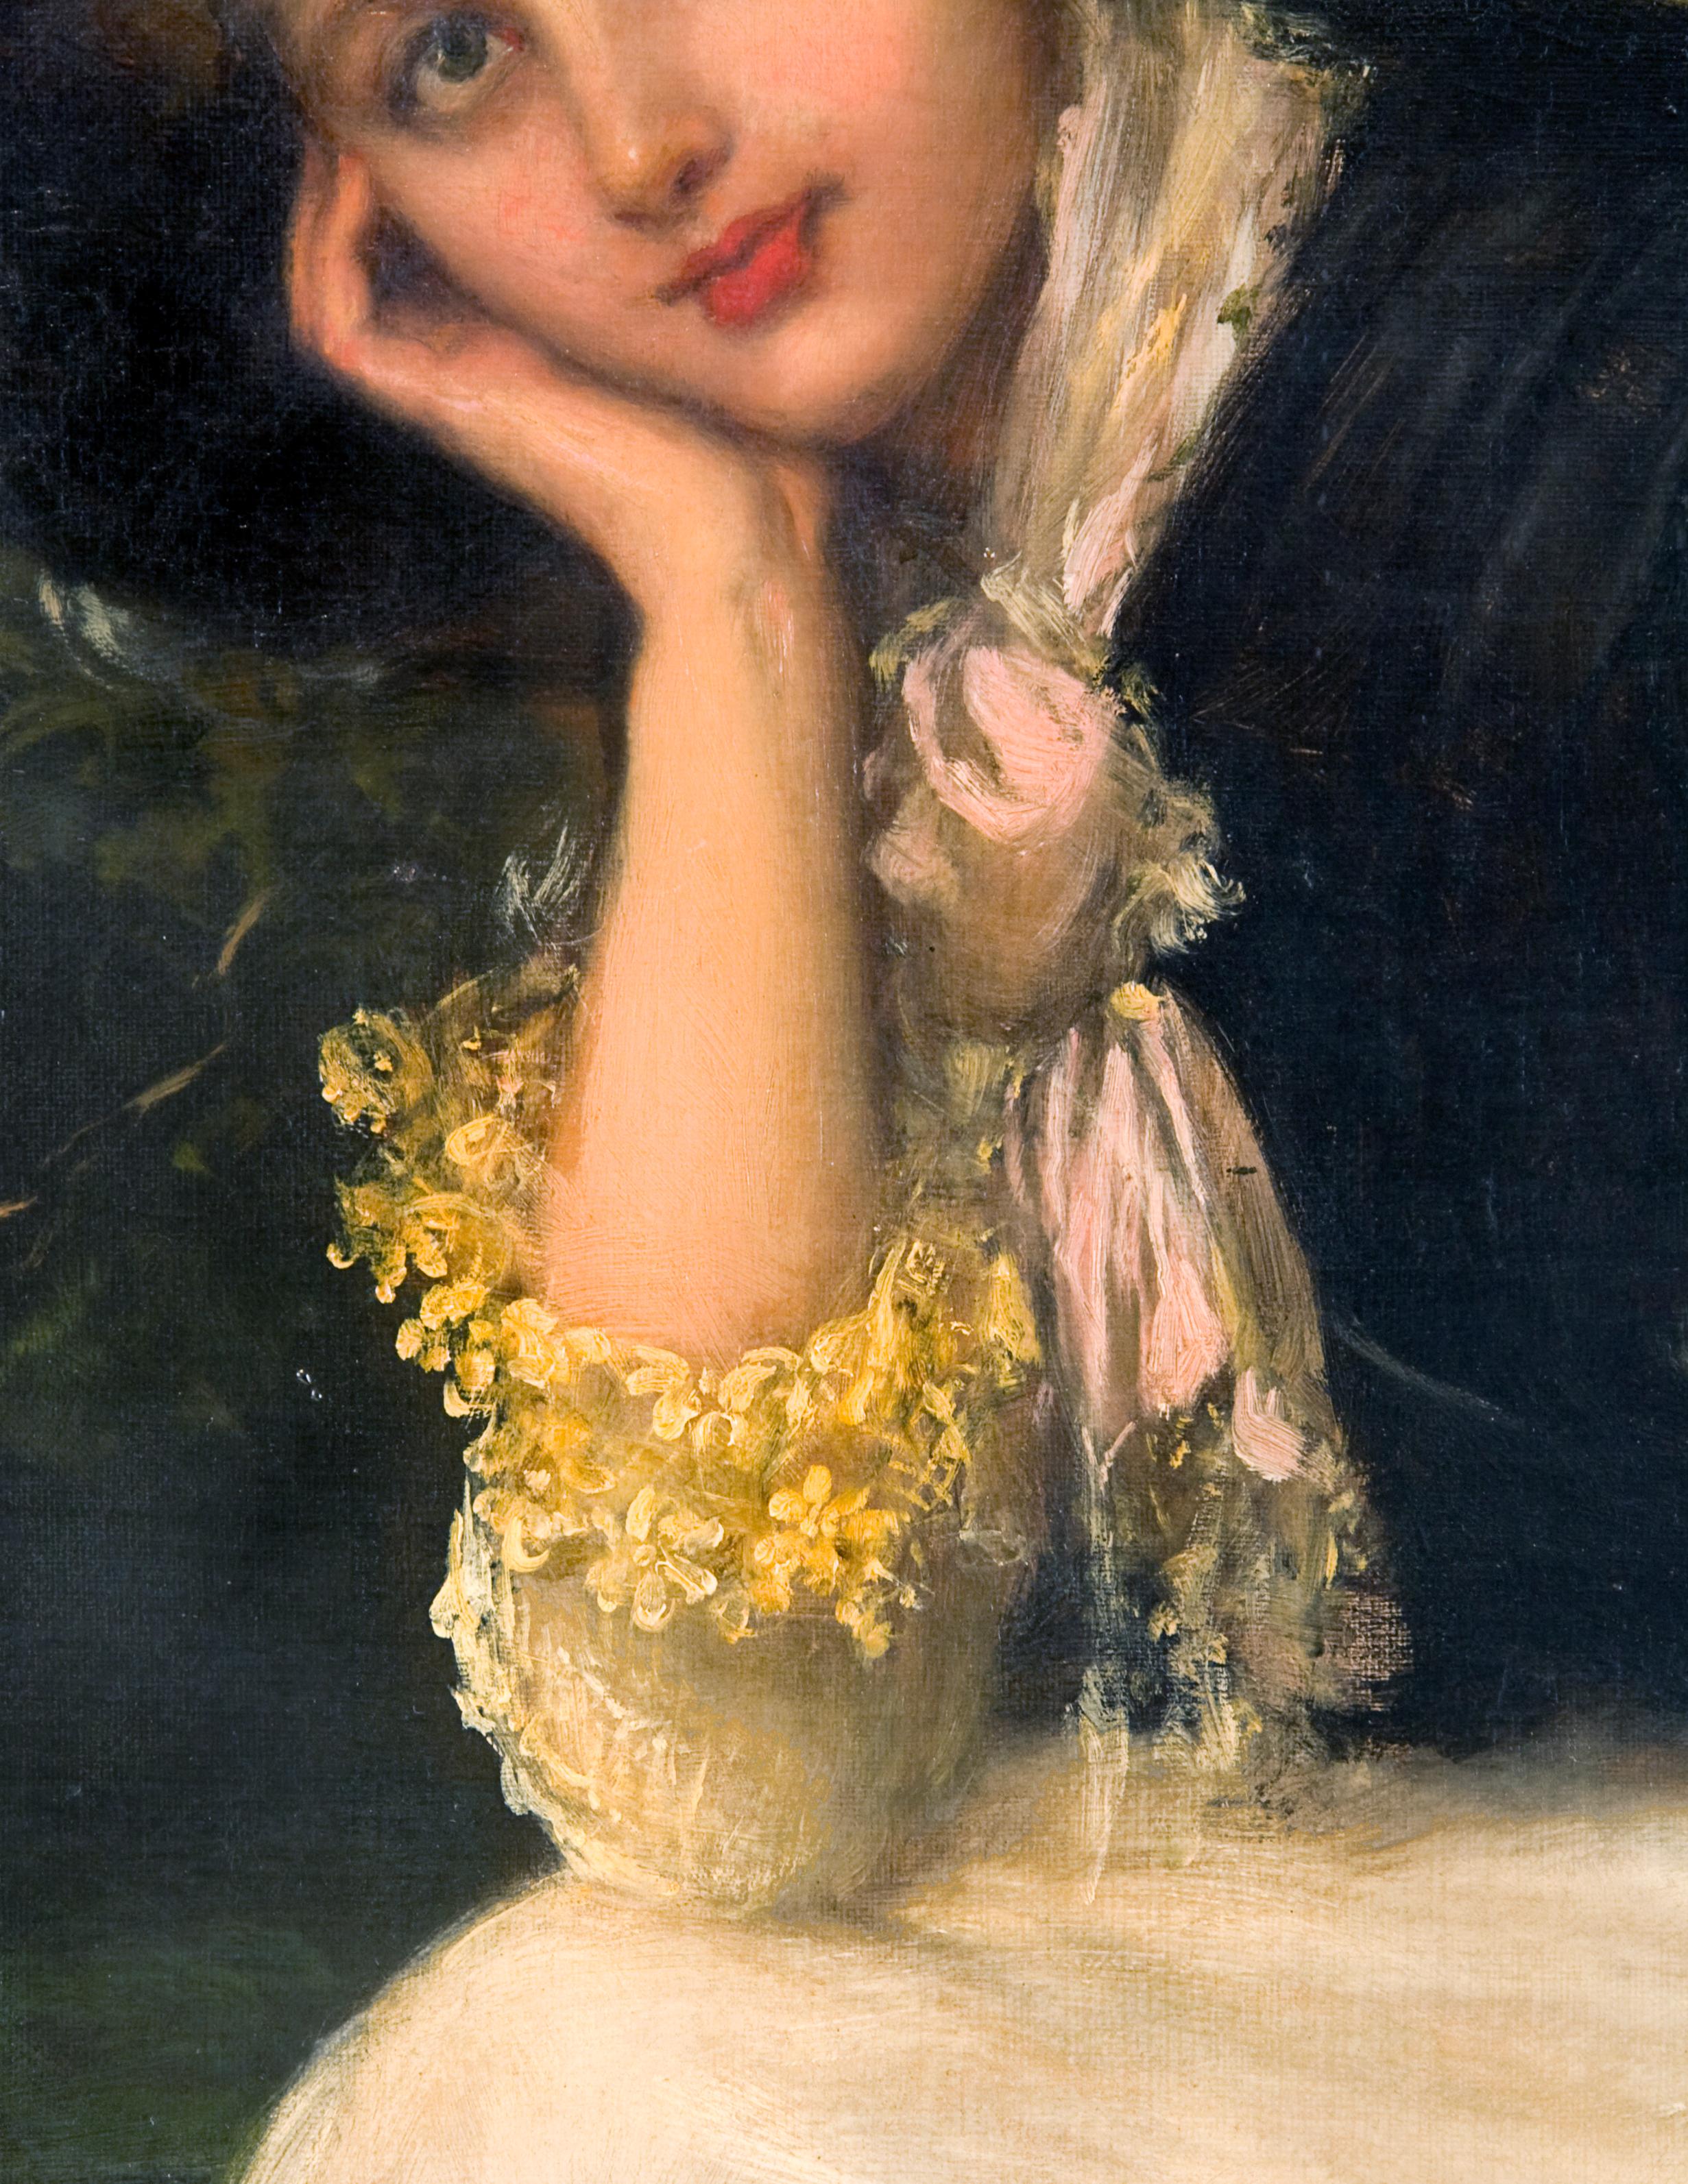 19th century portraits